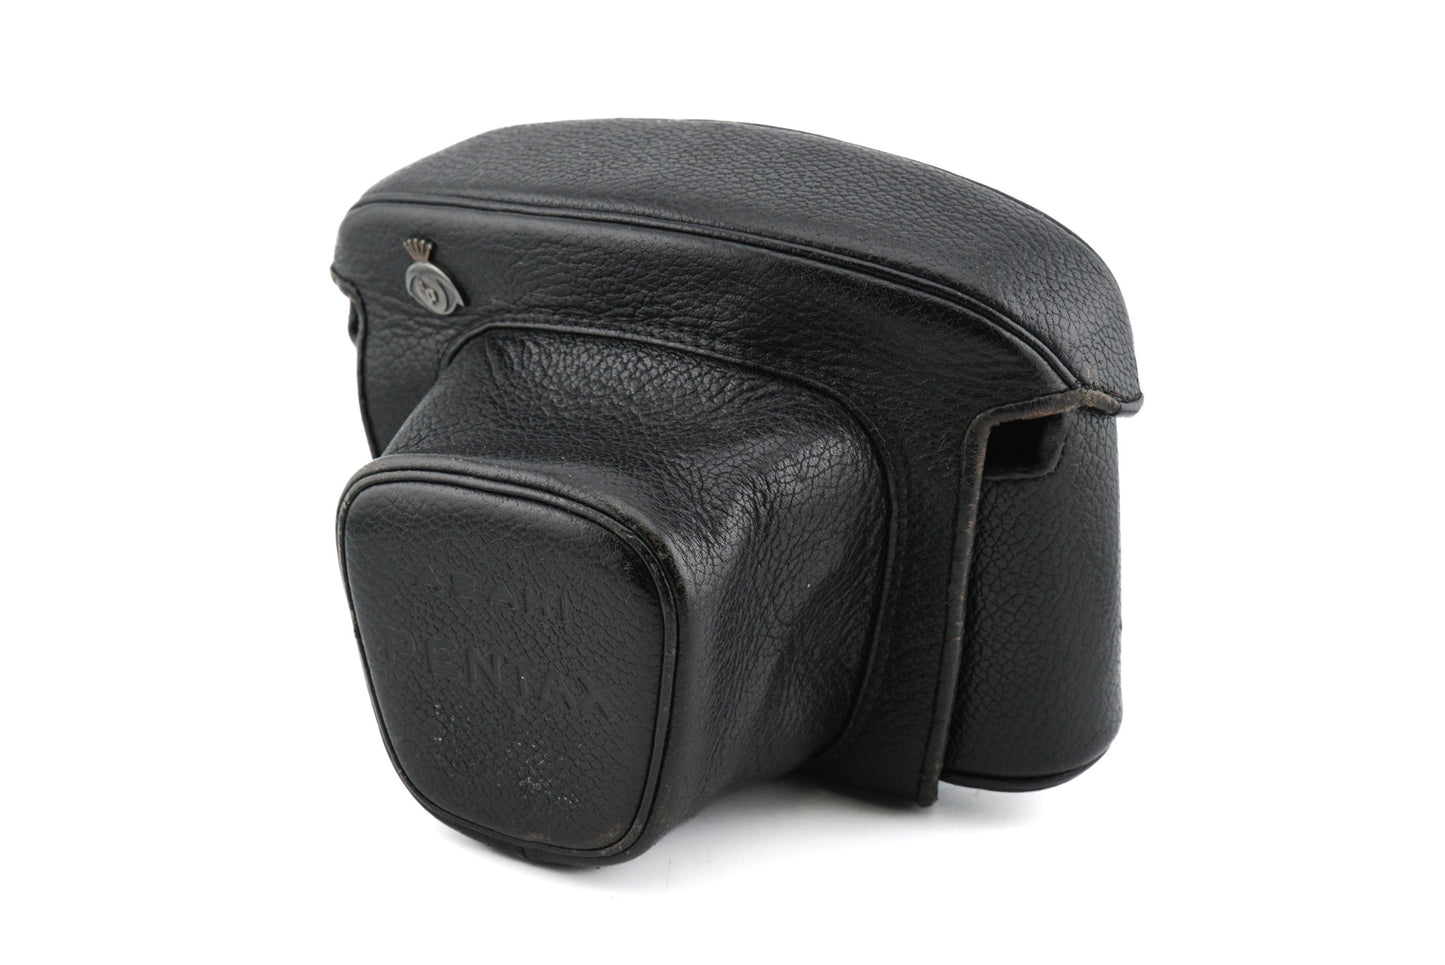 Pentax Spotmatic Leather Case - Accessory